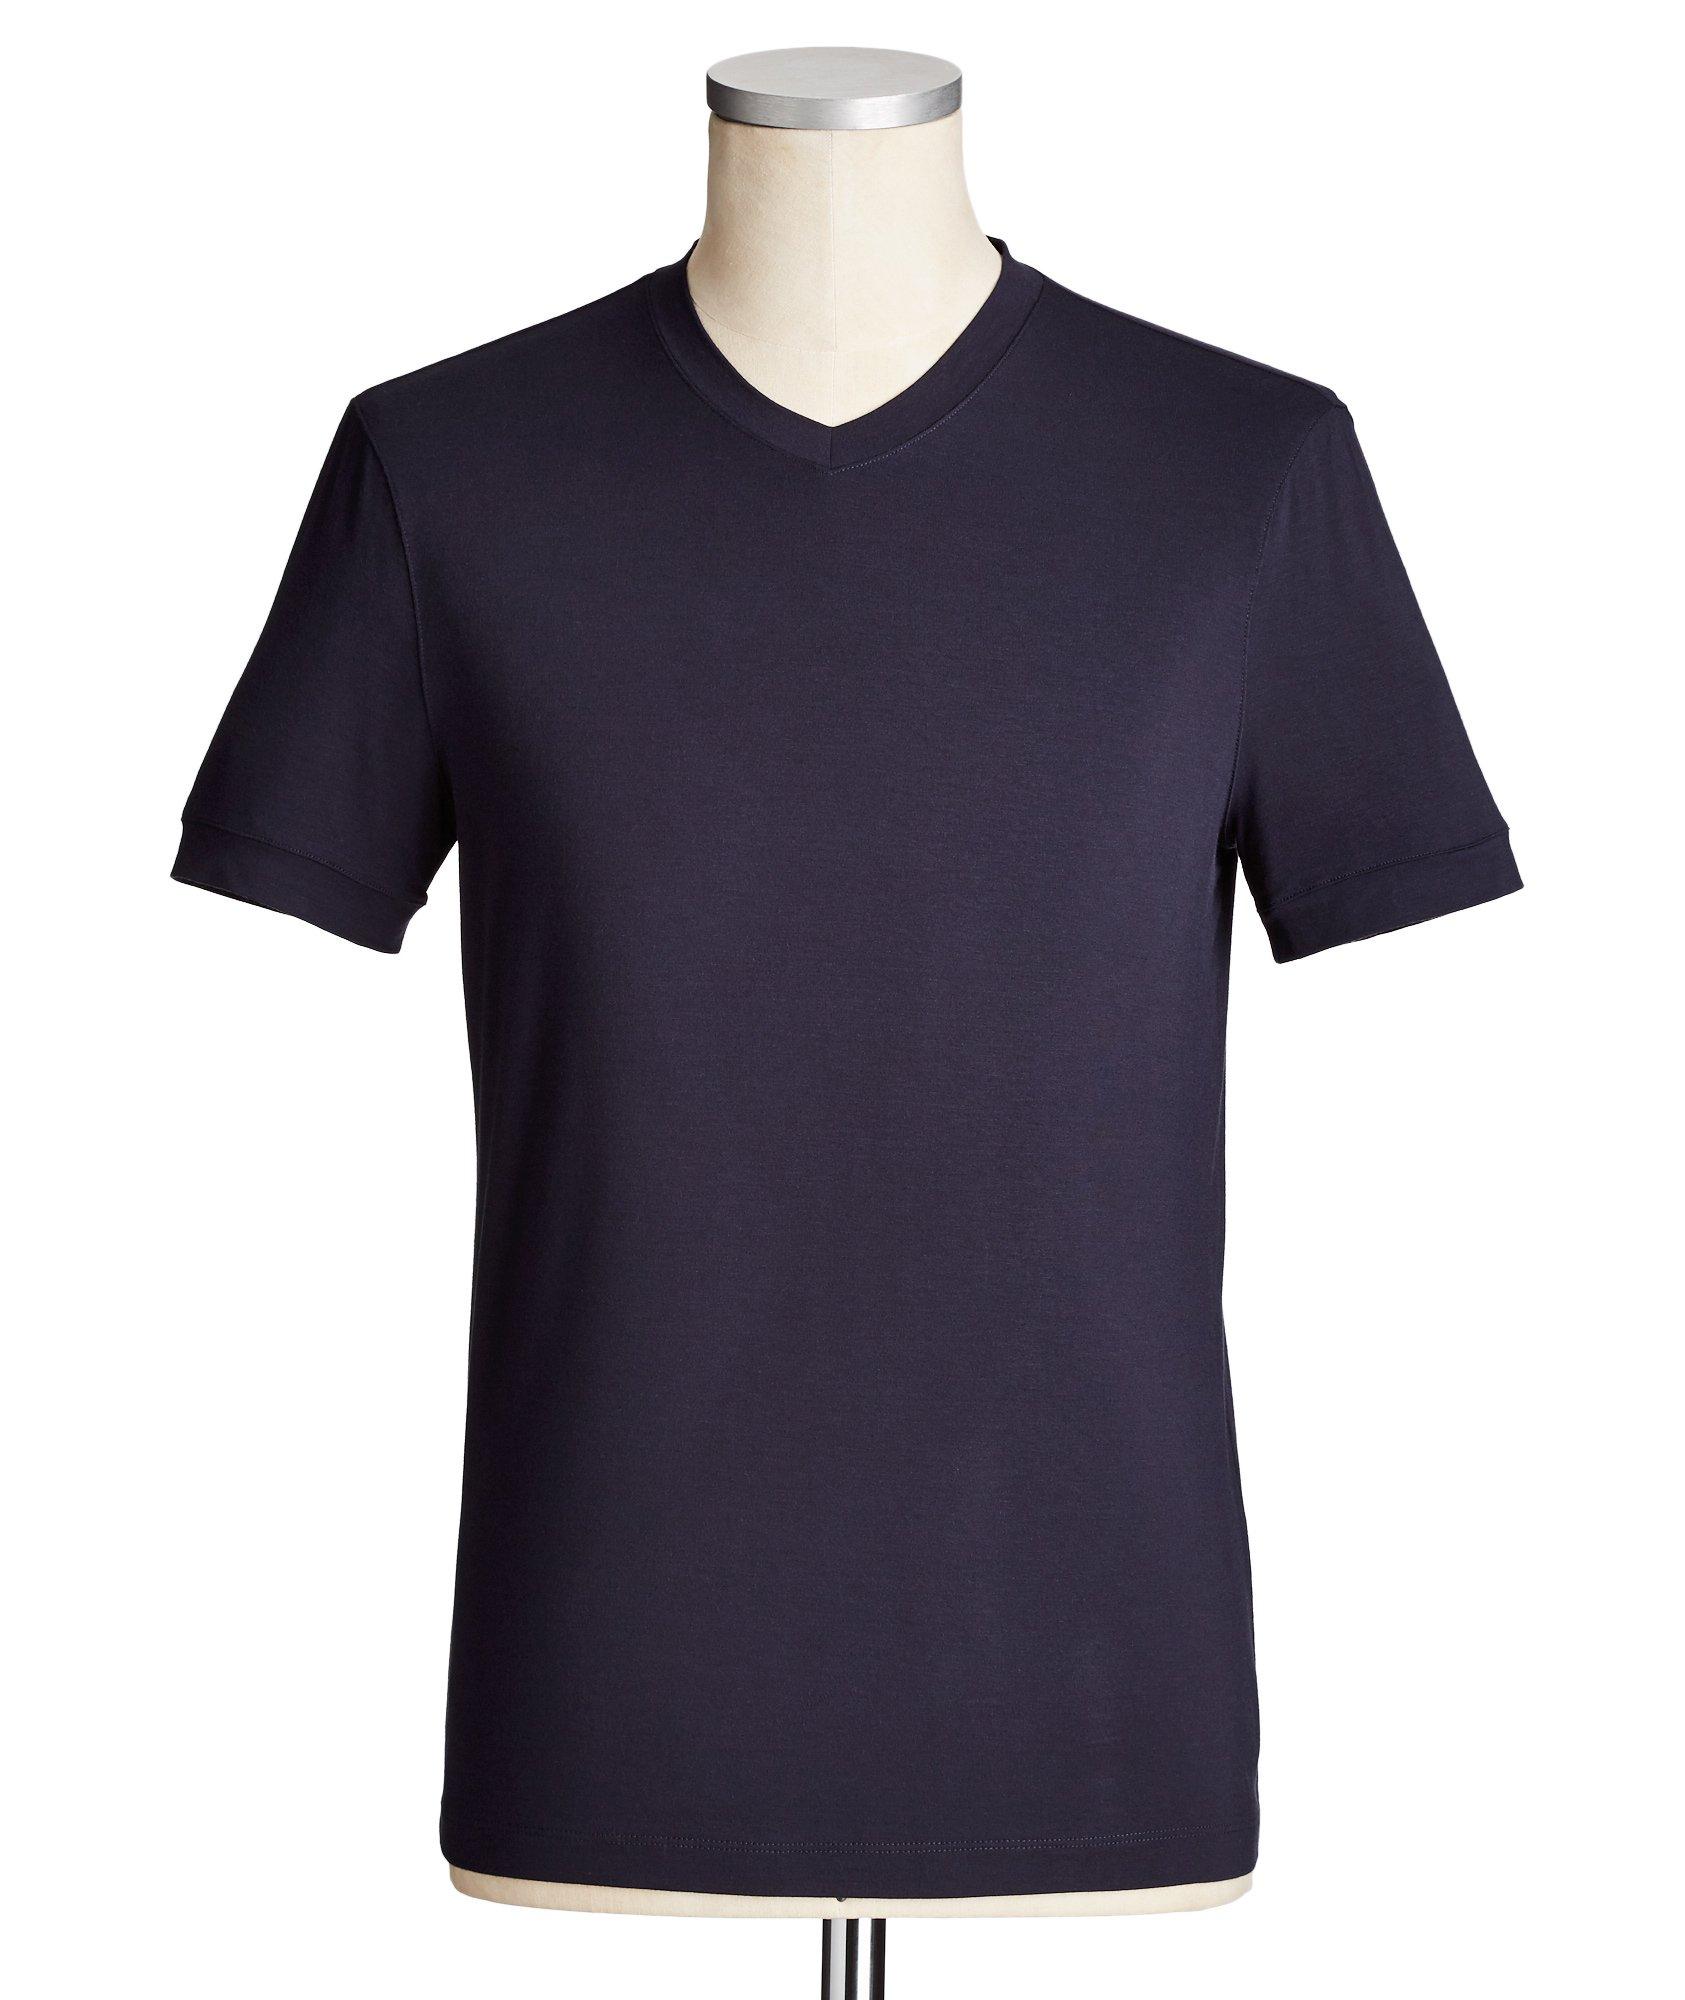 Stretch Blend T-Shirt image 0